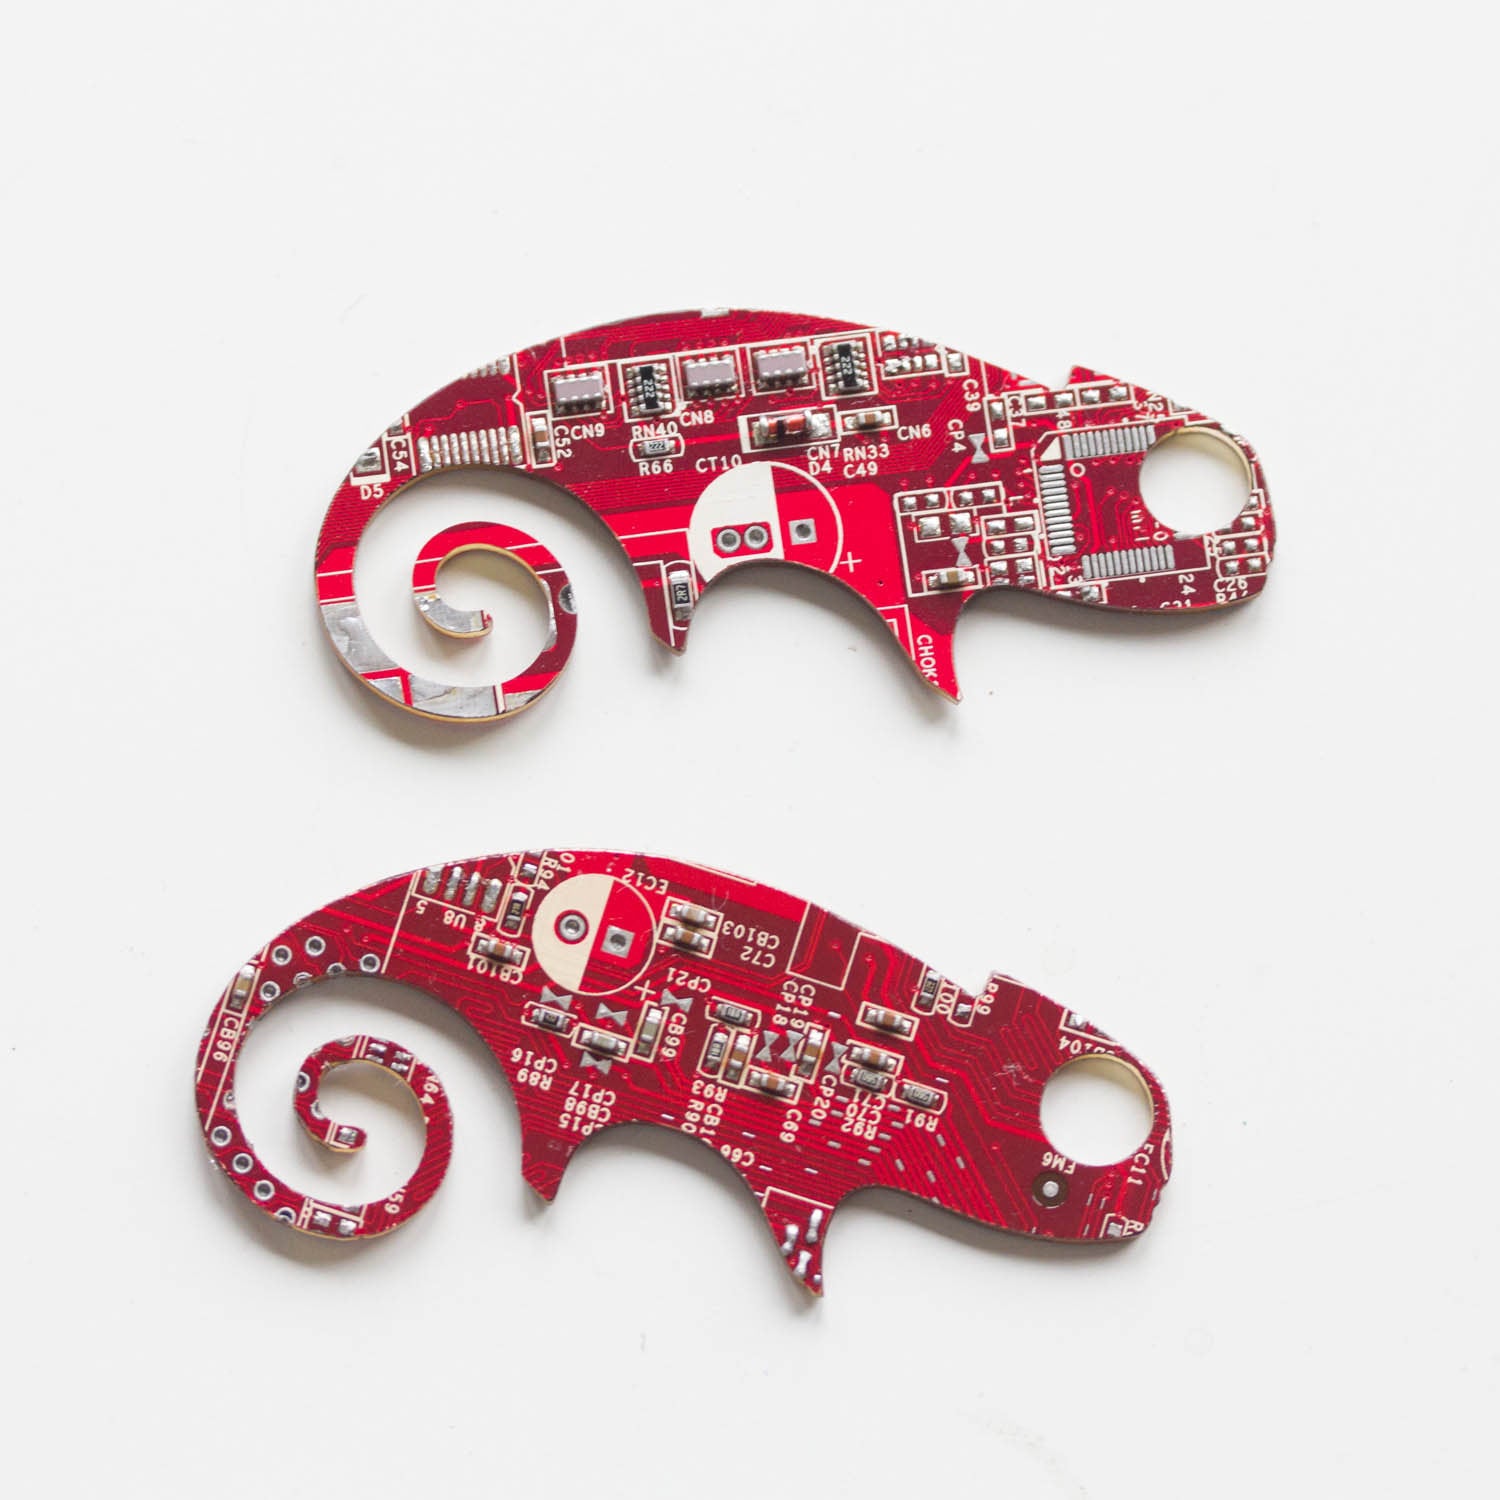 Circuit board Chameleon lizard - brooch, keychain or bag tag